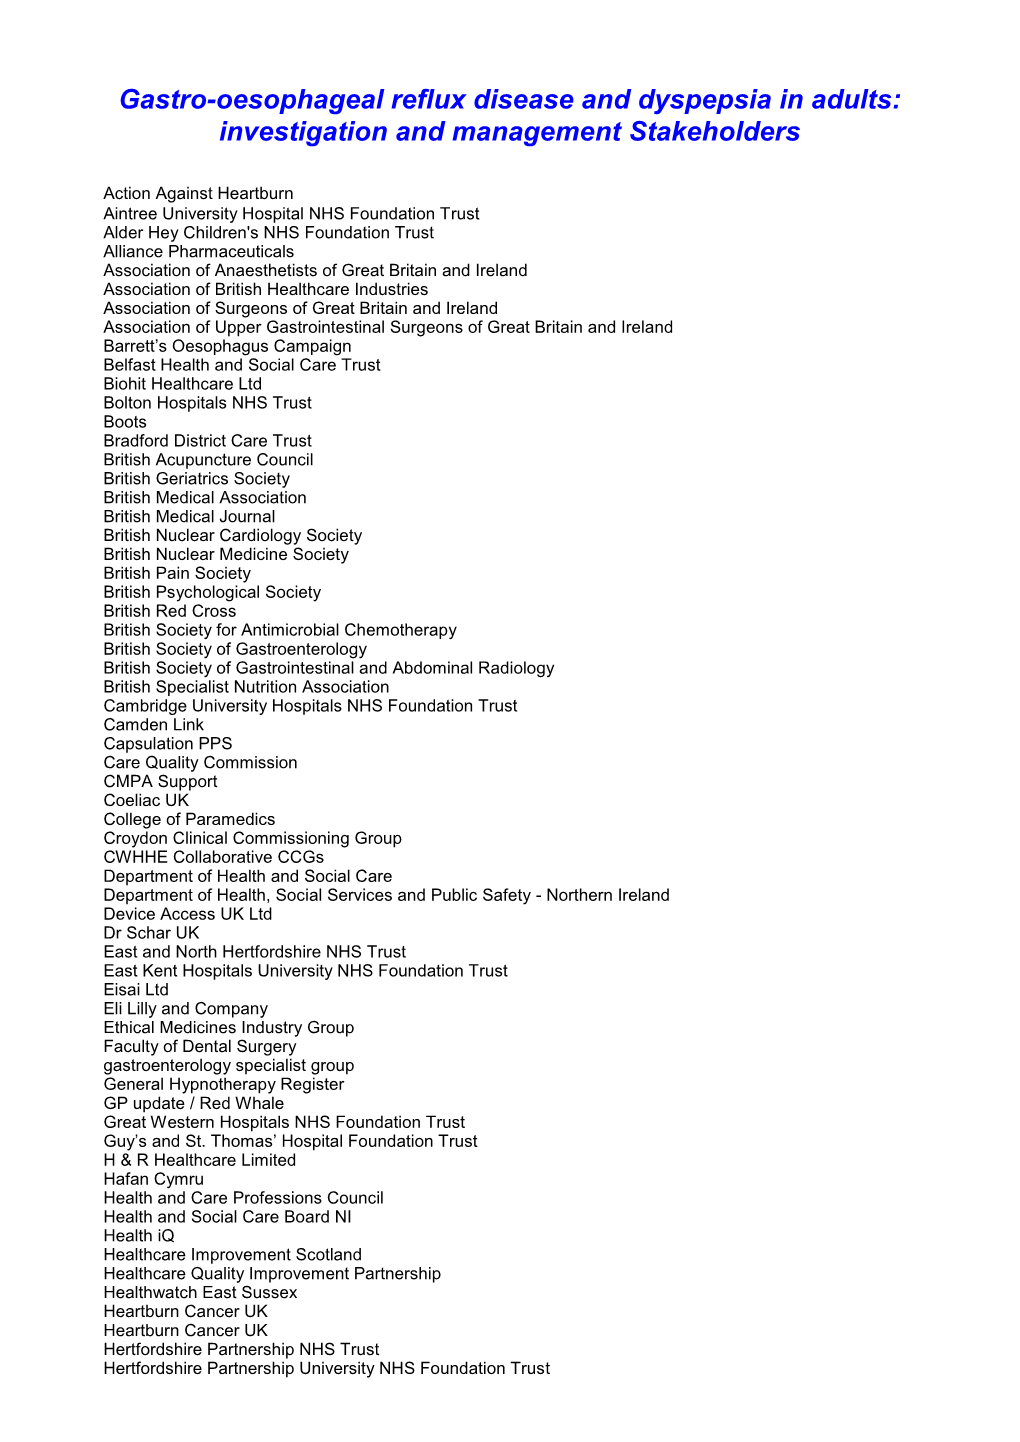 Stakeholder List PDF 141 KB